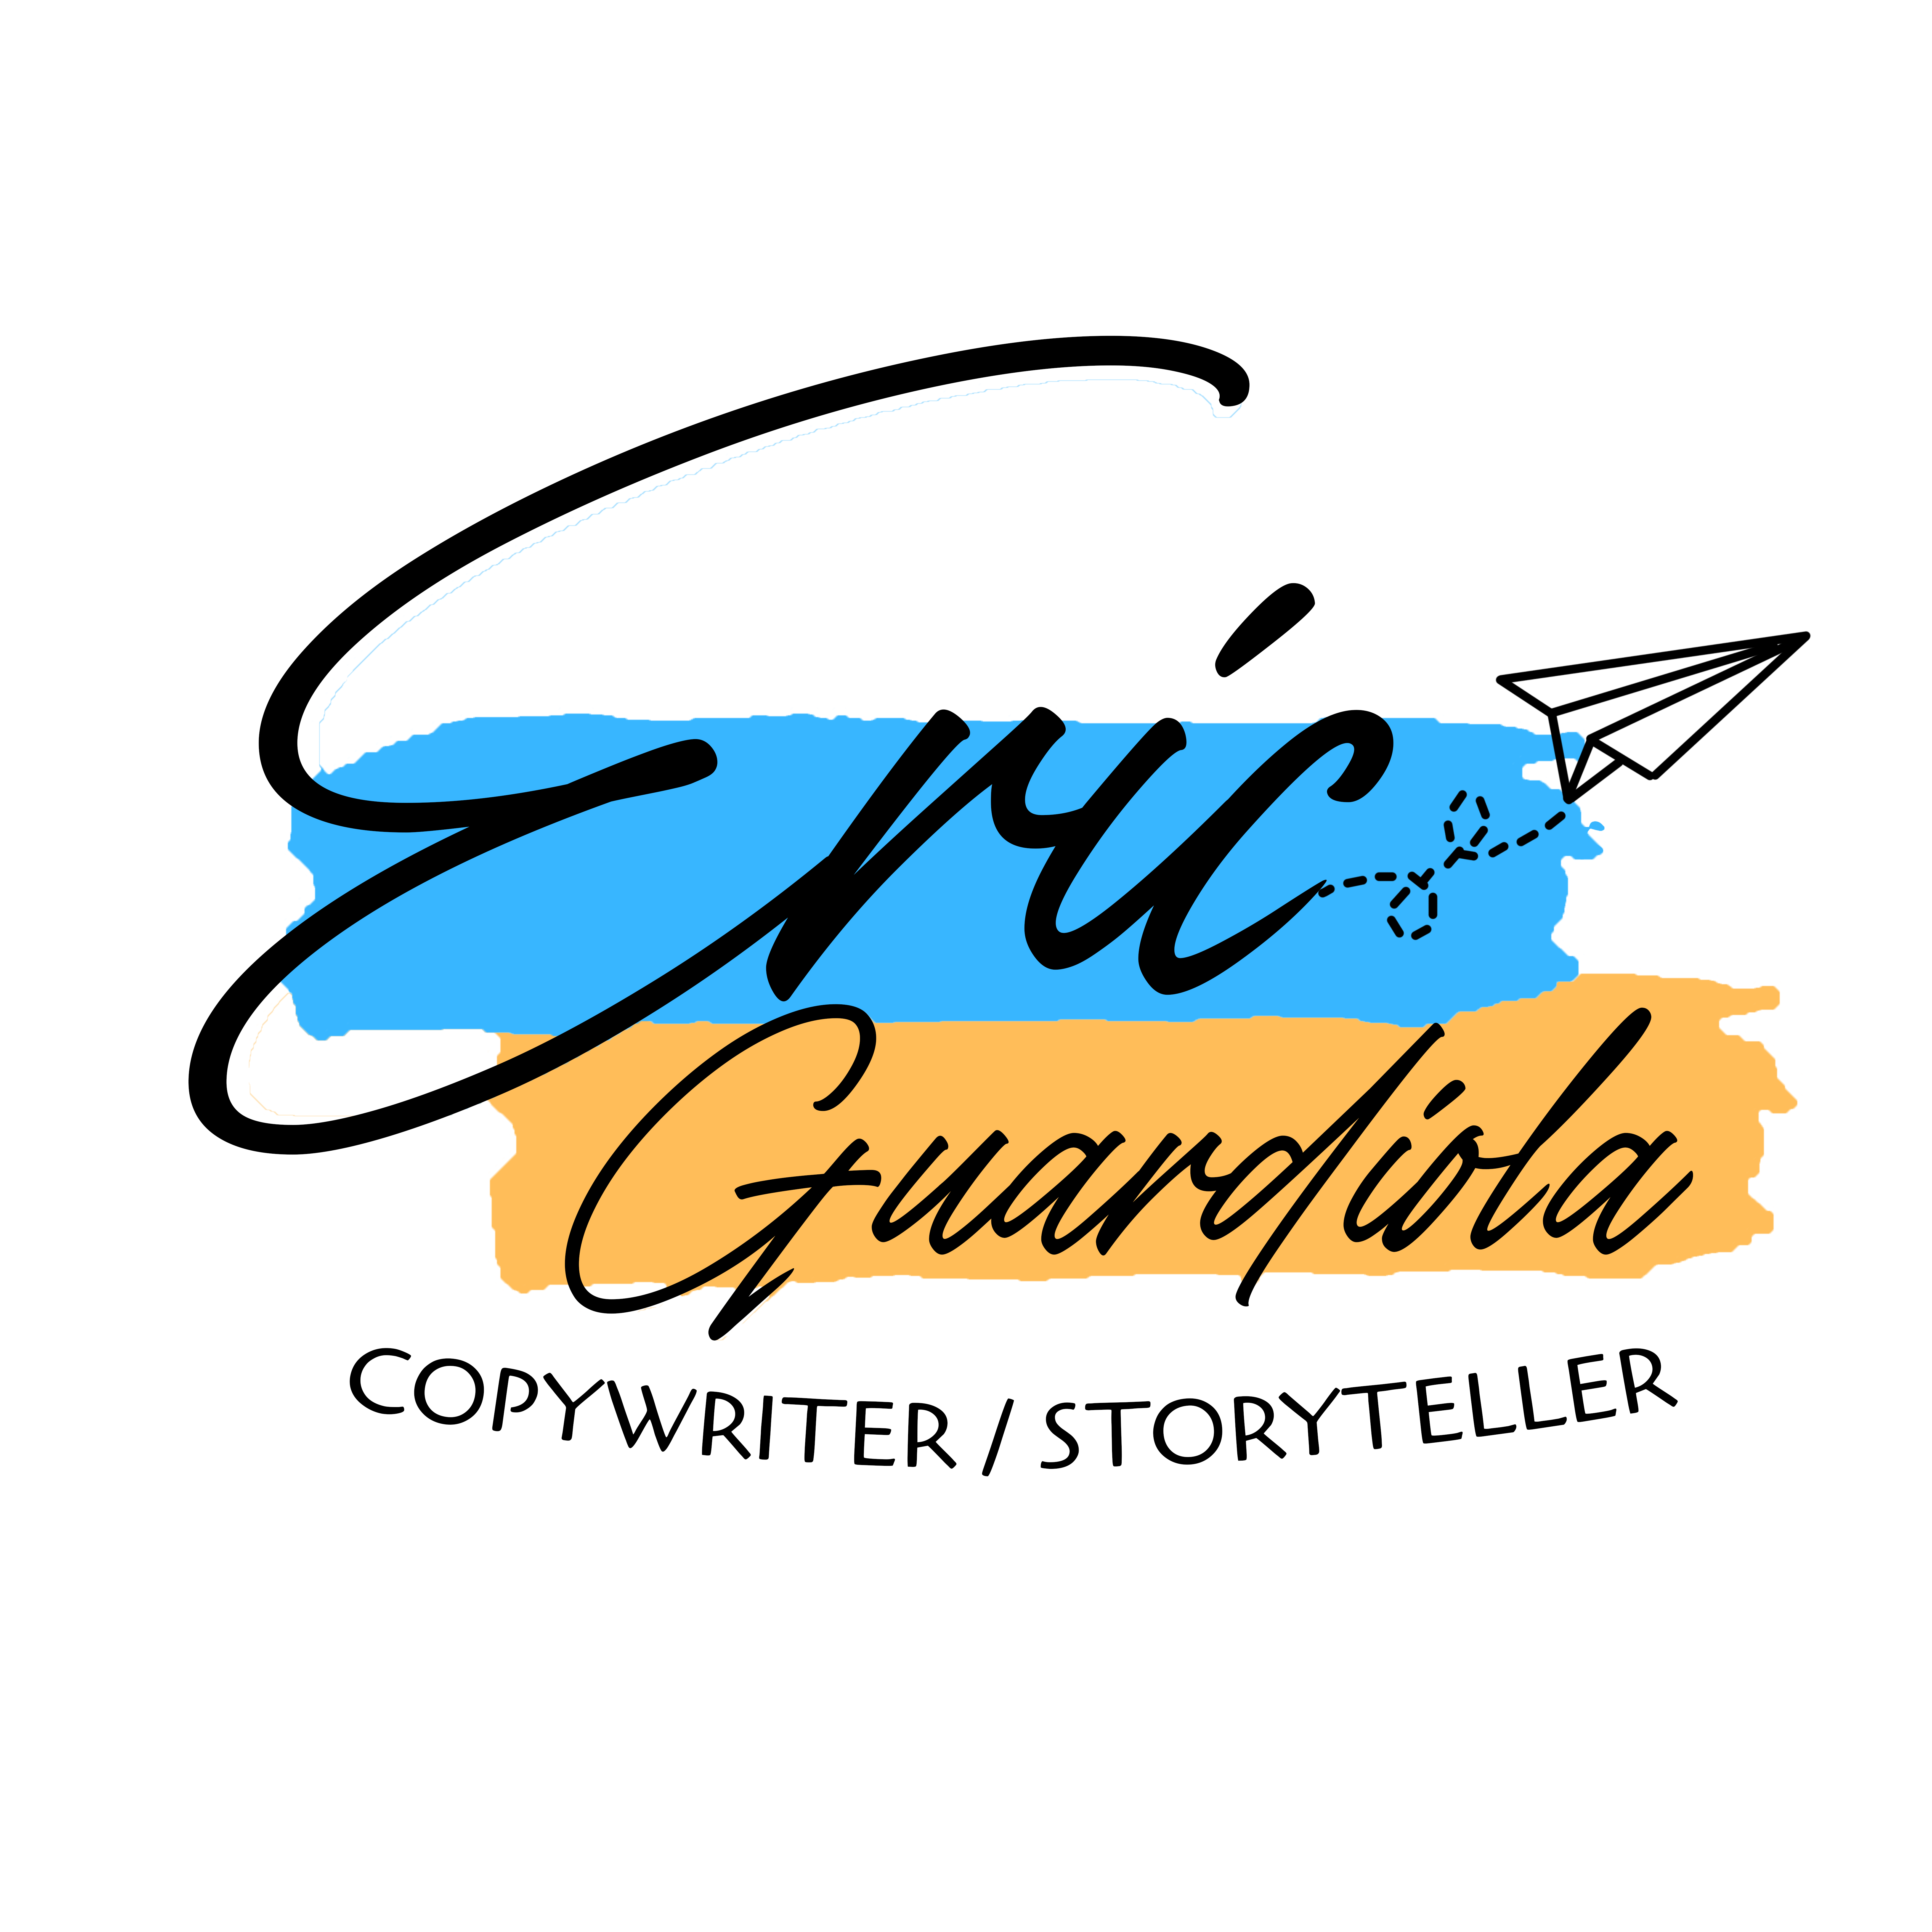 eric guardiola copywriter storyteller